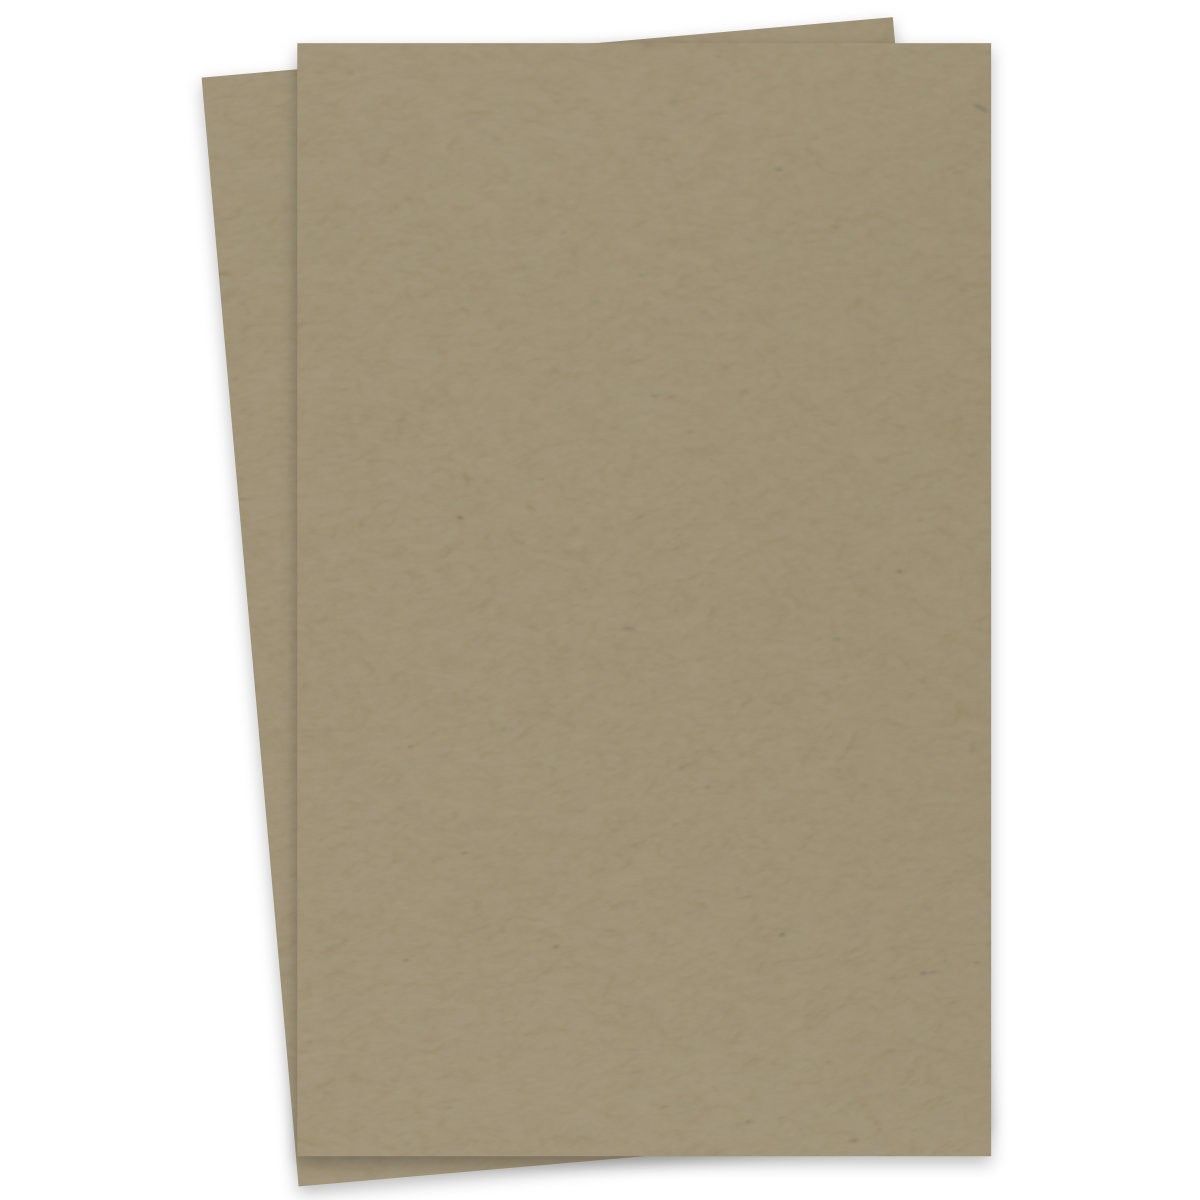 Speckletone True White - 12X18 Card Stock Paper - 100Lb Cover (270Gsm) -  100 Pk